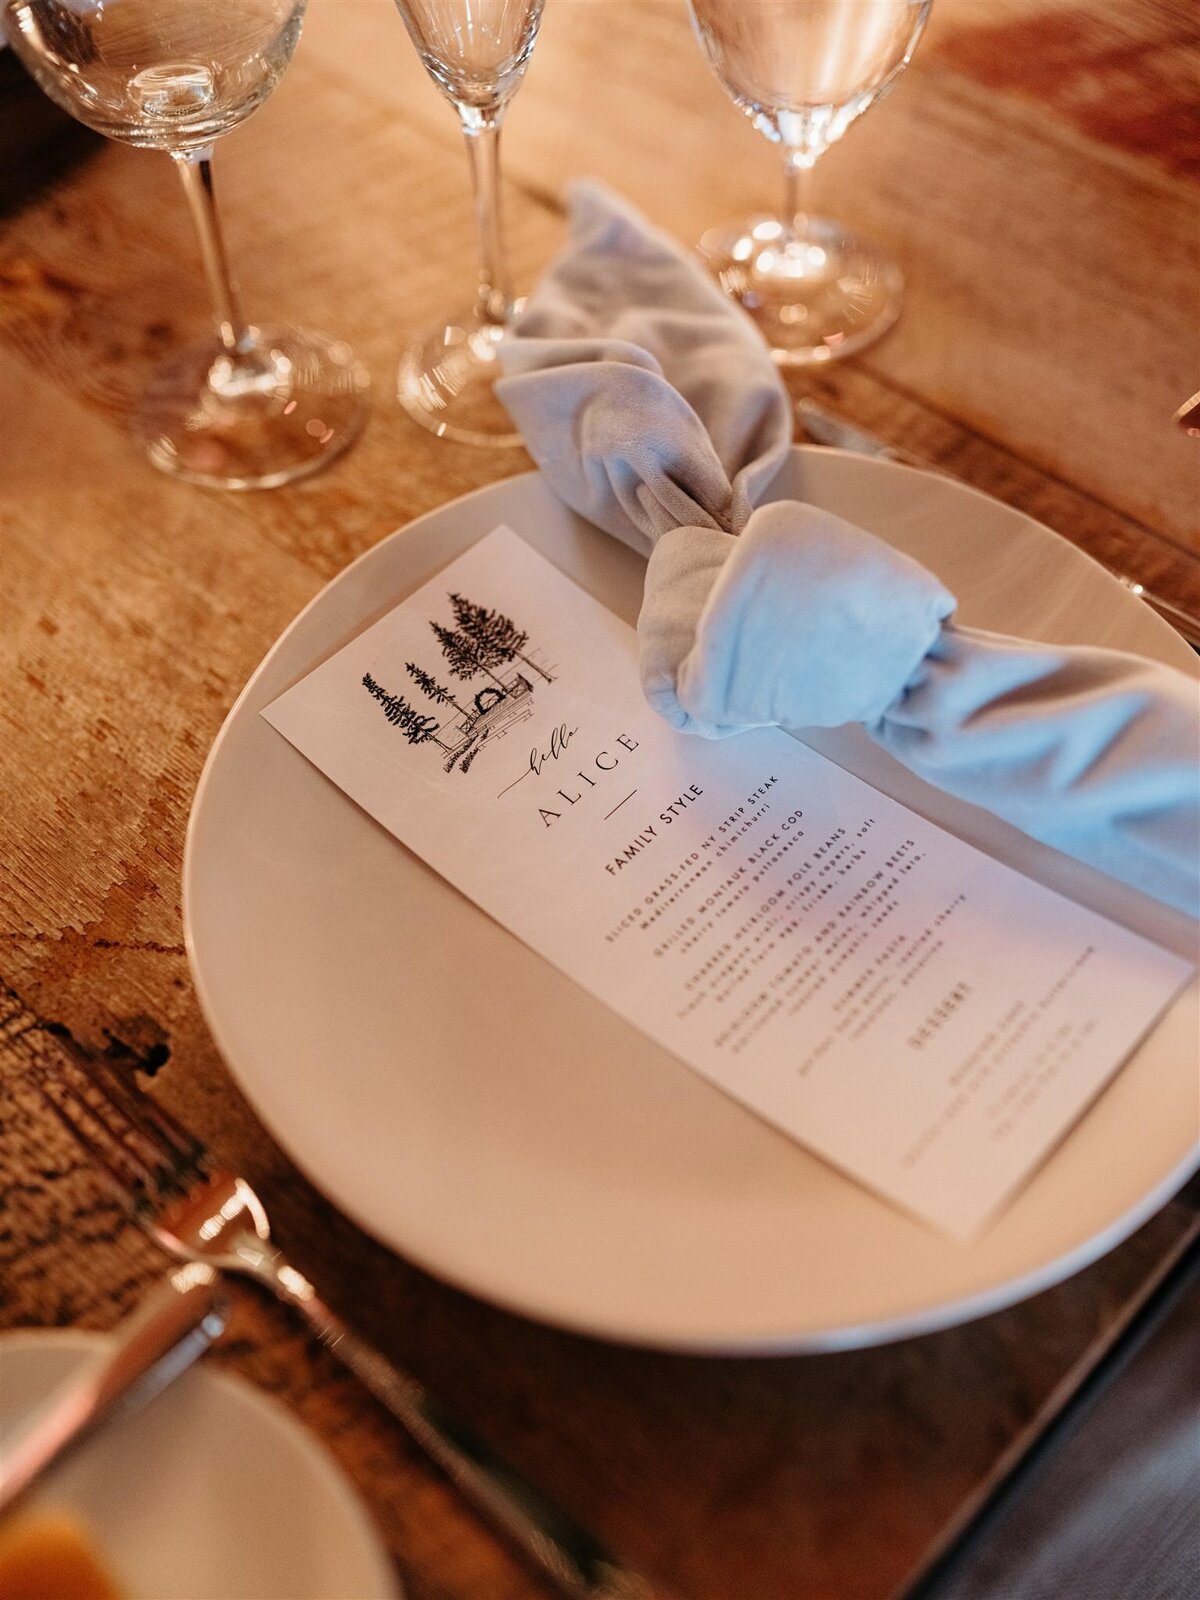 Candle-lit closeup of wedding reception tablescape, round white plate, elegant glasses and silverware, gray linen napkins and minimalist custom menu design.